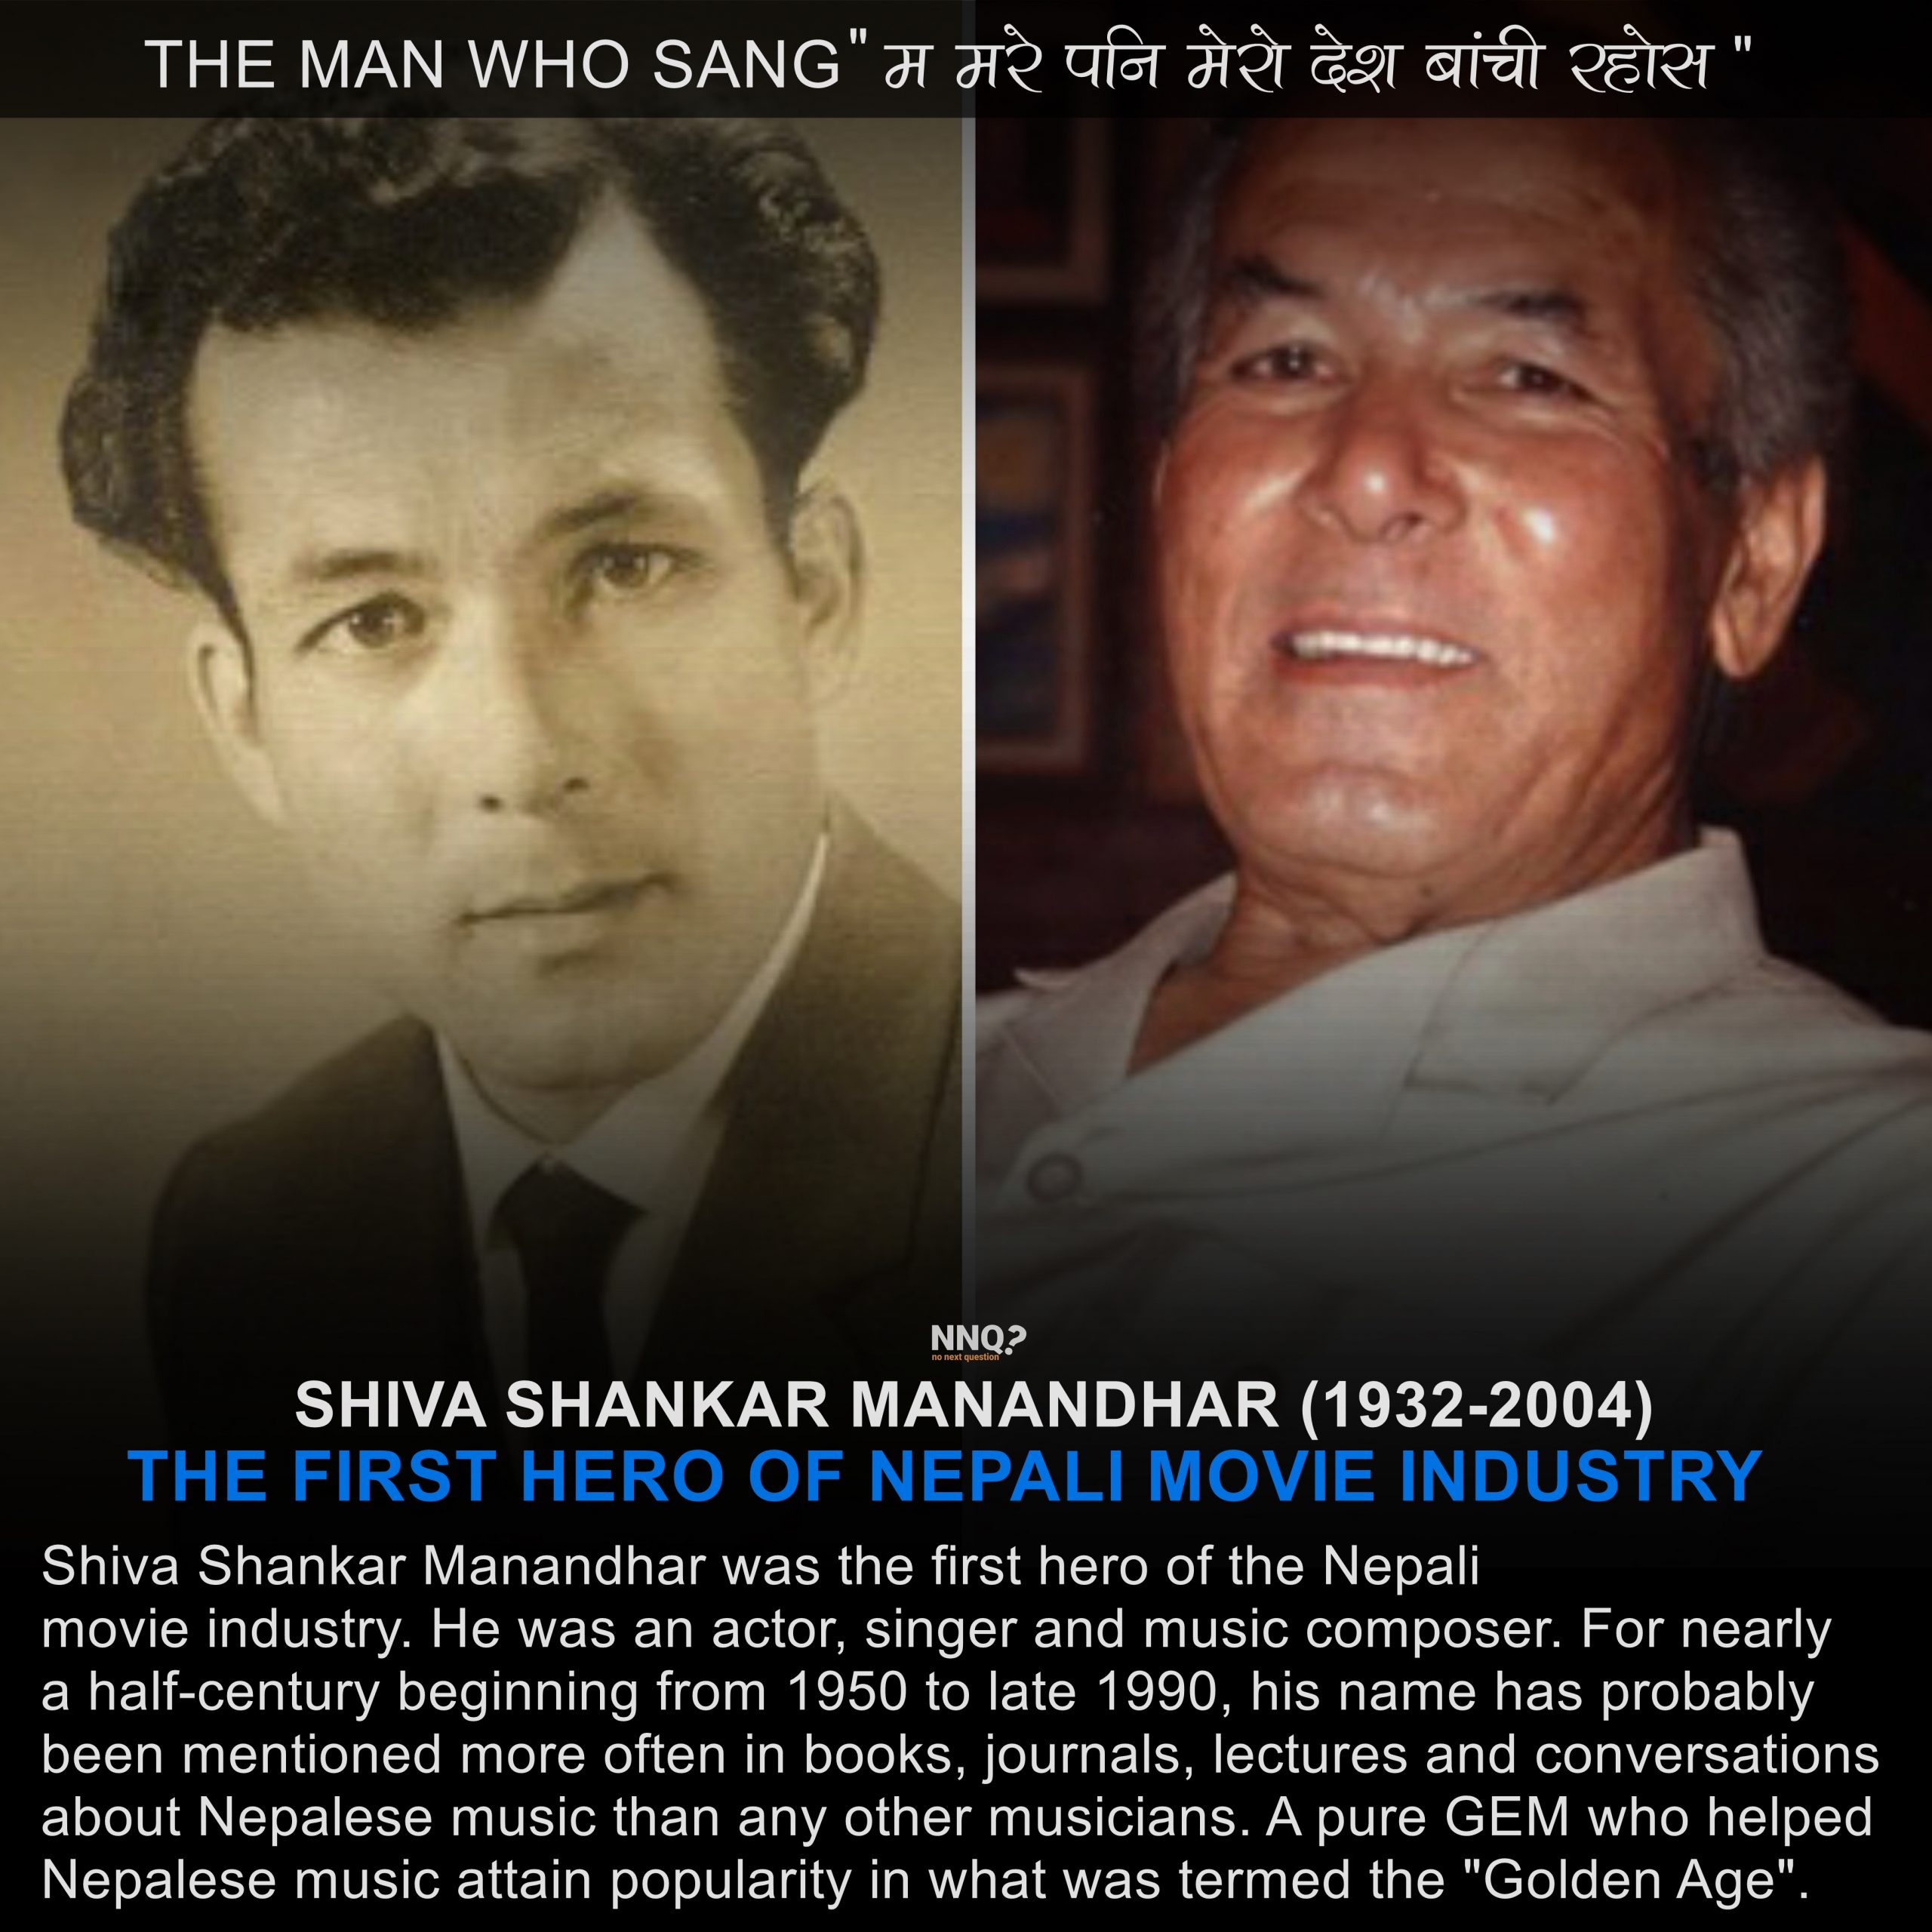 The first hero of Nepali movie industry- Shiva Shankar Manandhar